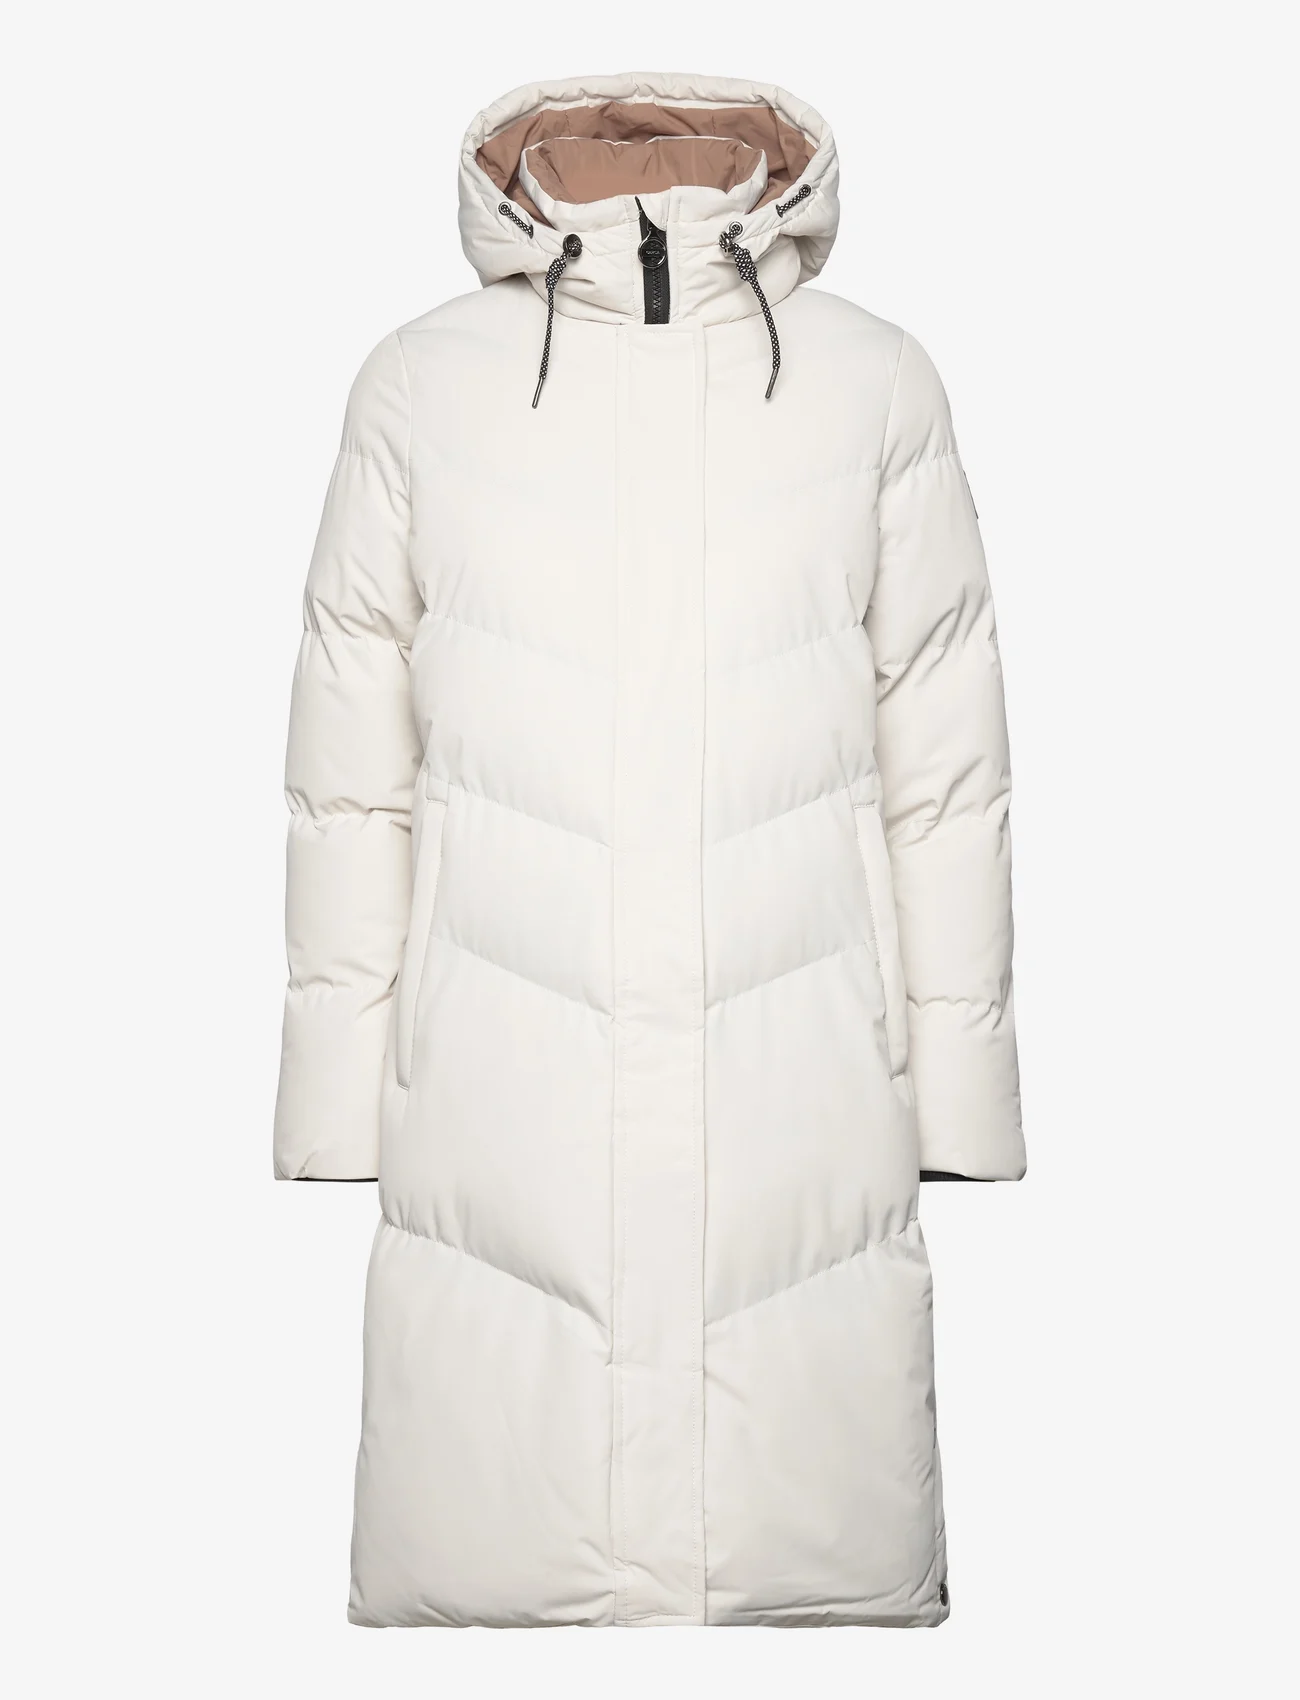 Garcia - ladies outdoor jackets - vinterjackor - cream - 0